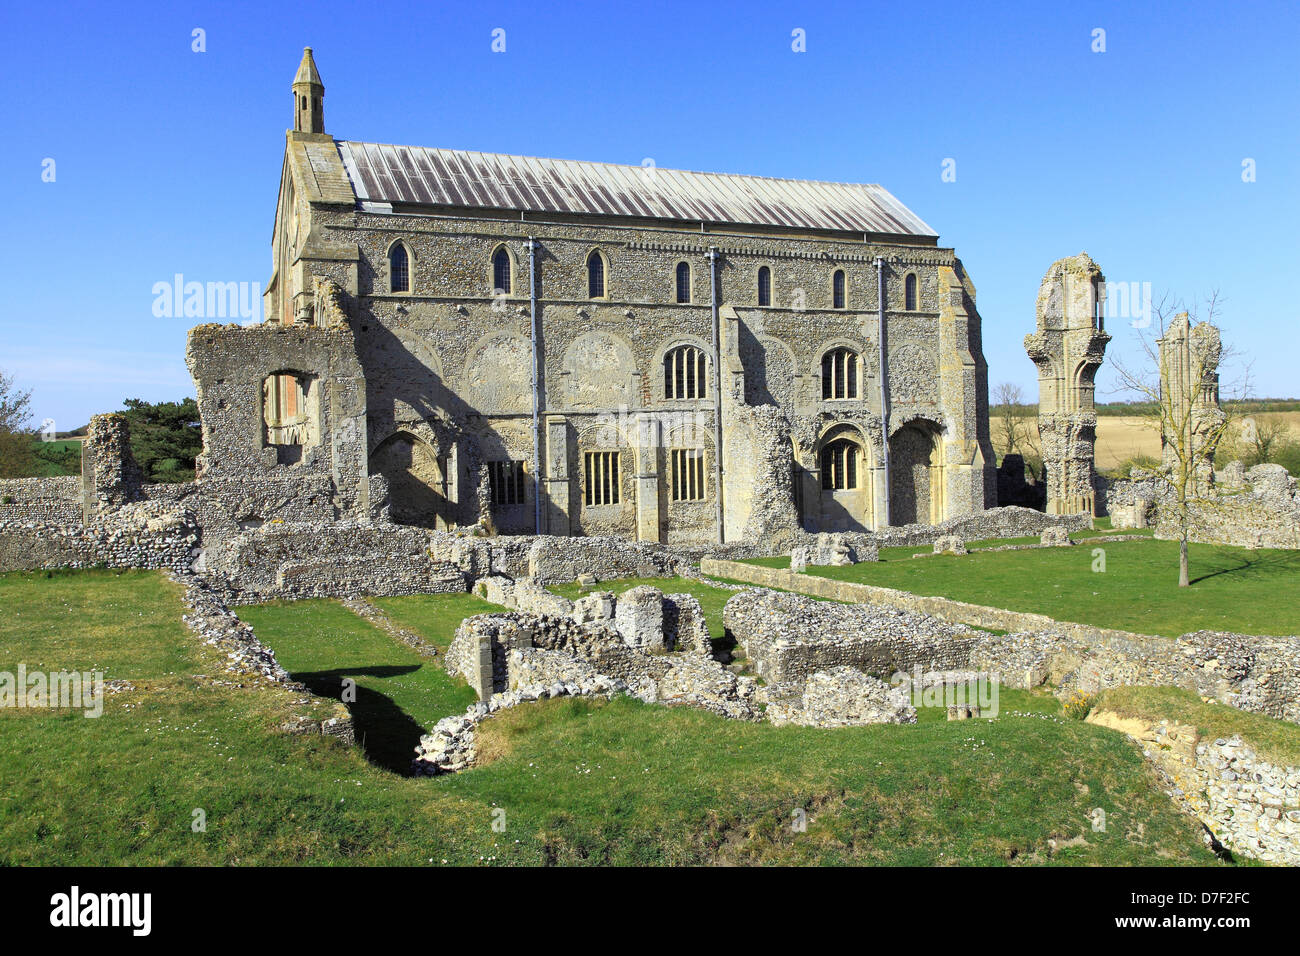 Binham Priory, Norfolk, Chiesa e rovine monastiche, inglese architettura medievale, England Regno Unito, ordine benedettino Foto Stock